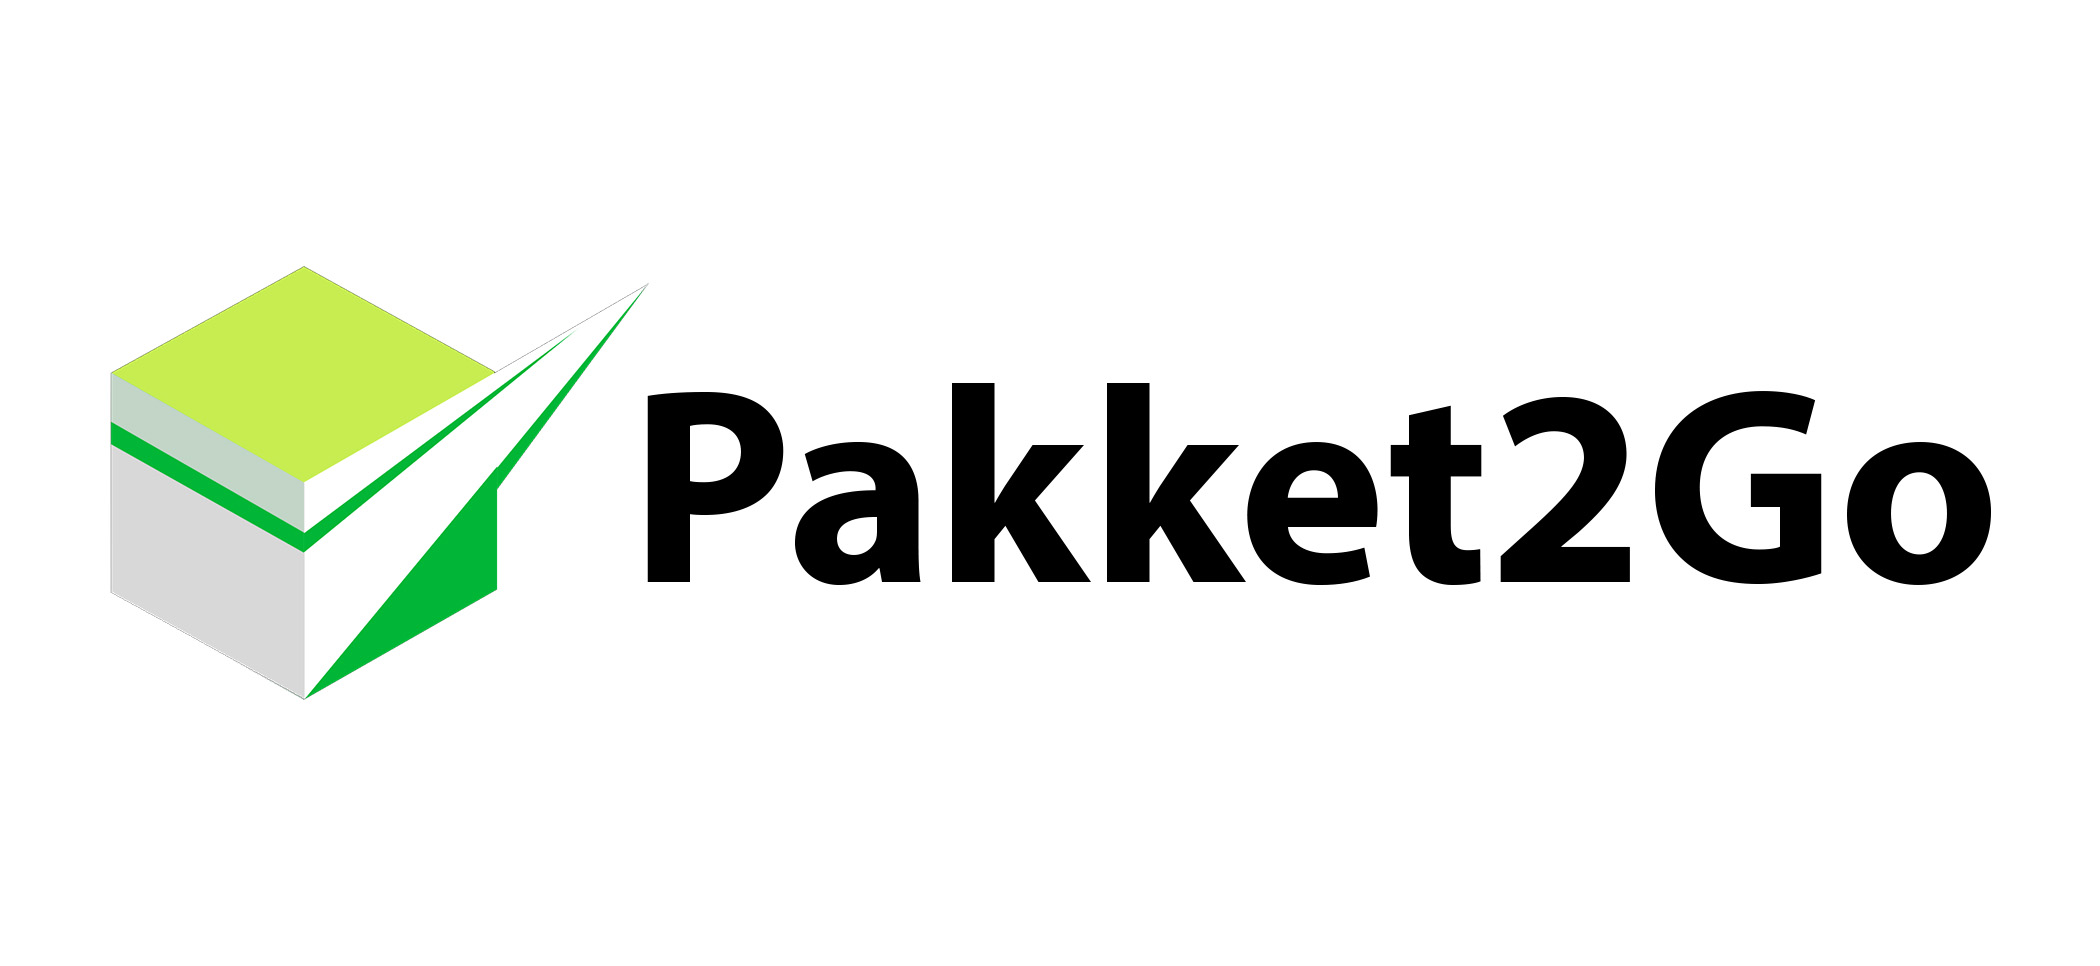 Pakket2go logo